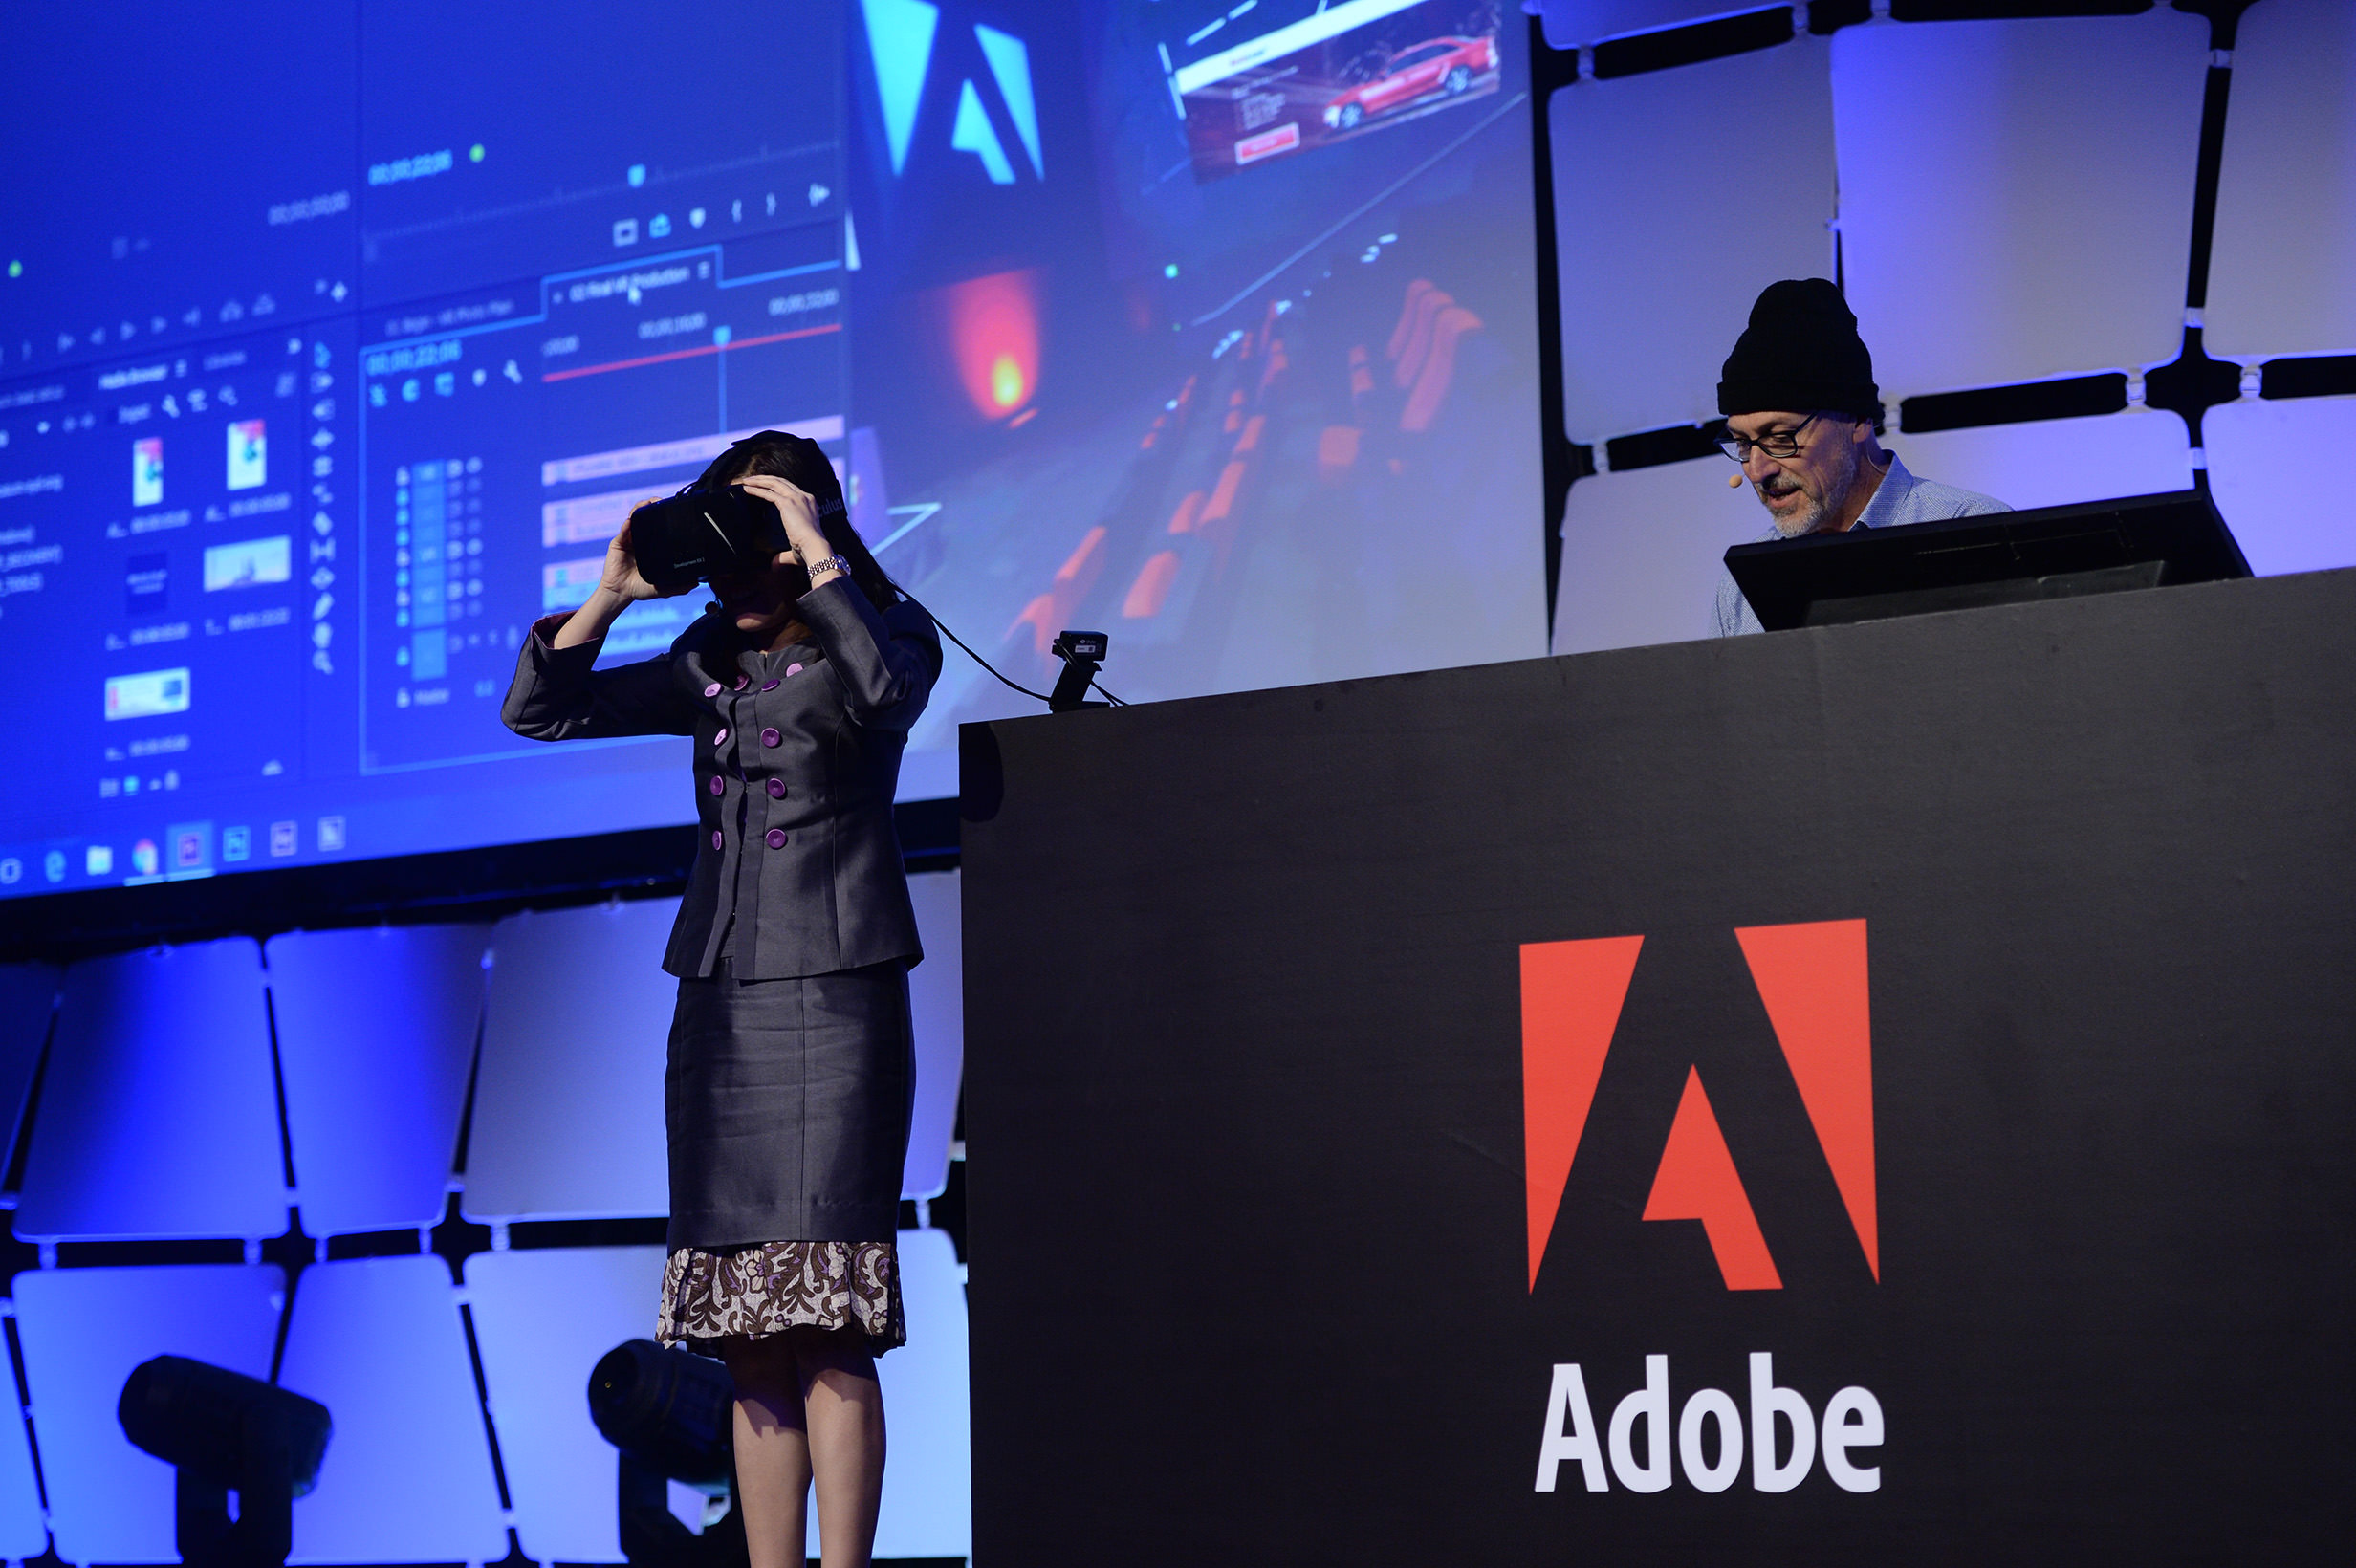 【Adobe新聞照片】Adobe亞太區數位體驗總監Michael Stoddart(右)與Adobe亞太區數位媒體總監Janie Lim(左)運用Adobe Primetime展演VR體驗